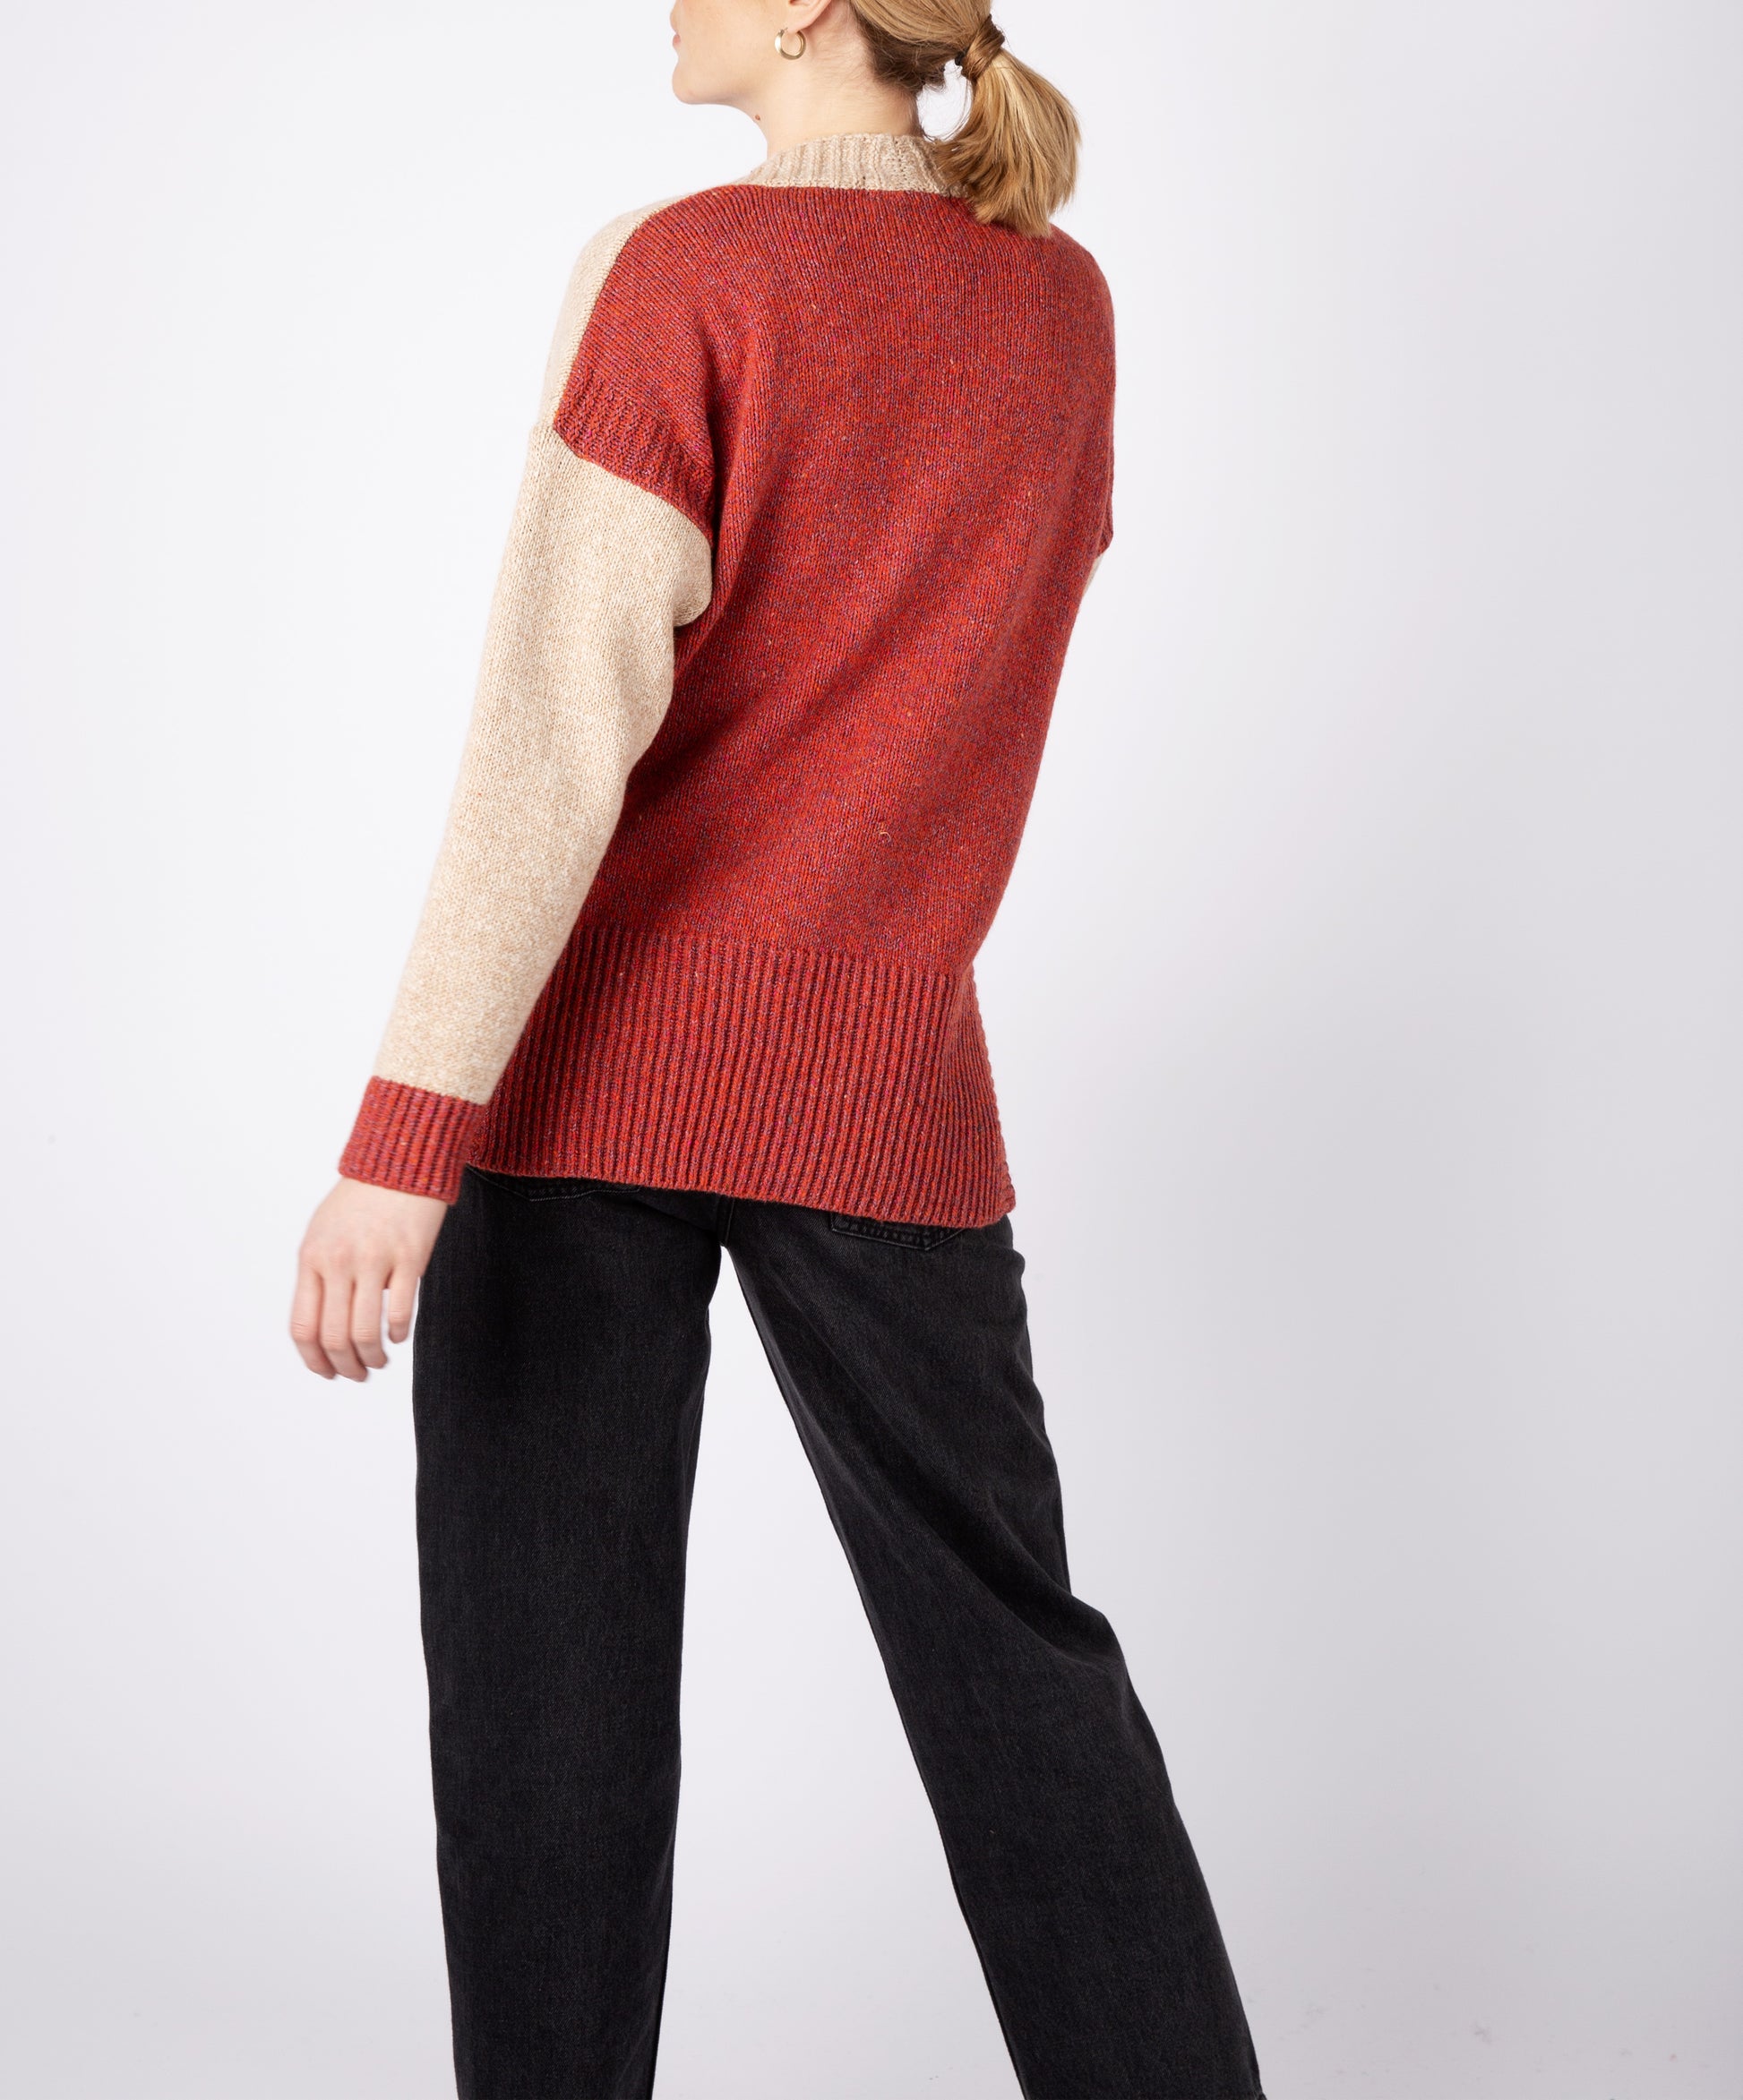 IrelandsEye Knitwear Women's Knitted 'Hawthorn' Colour Contrast Cardigan Sunset Seashell